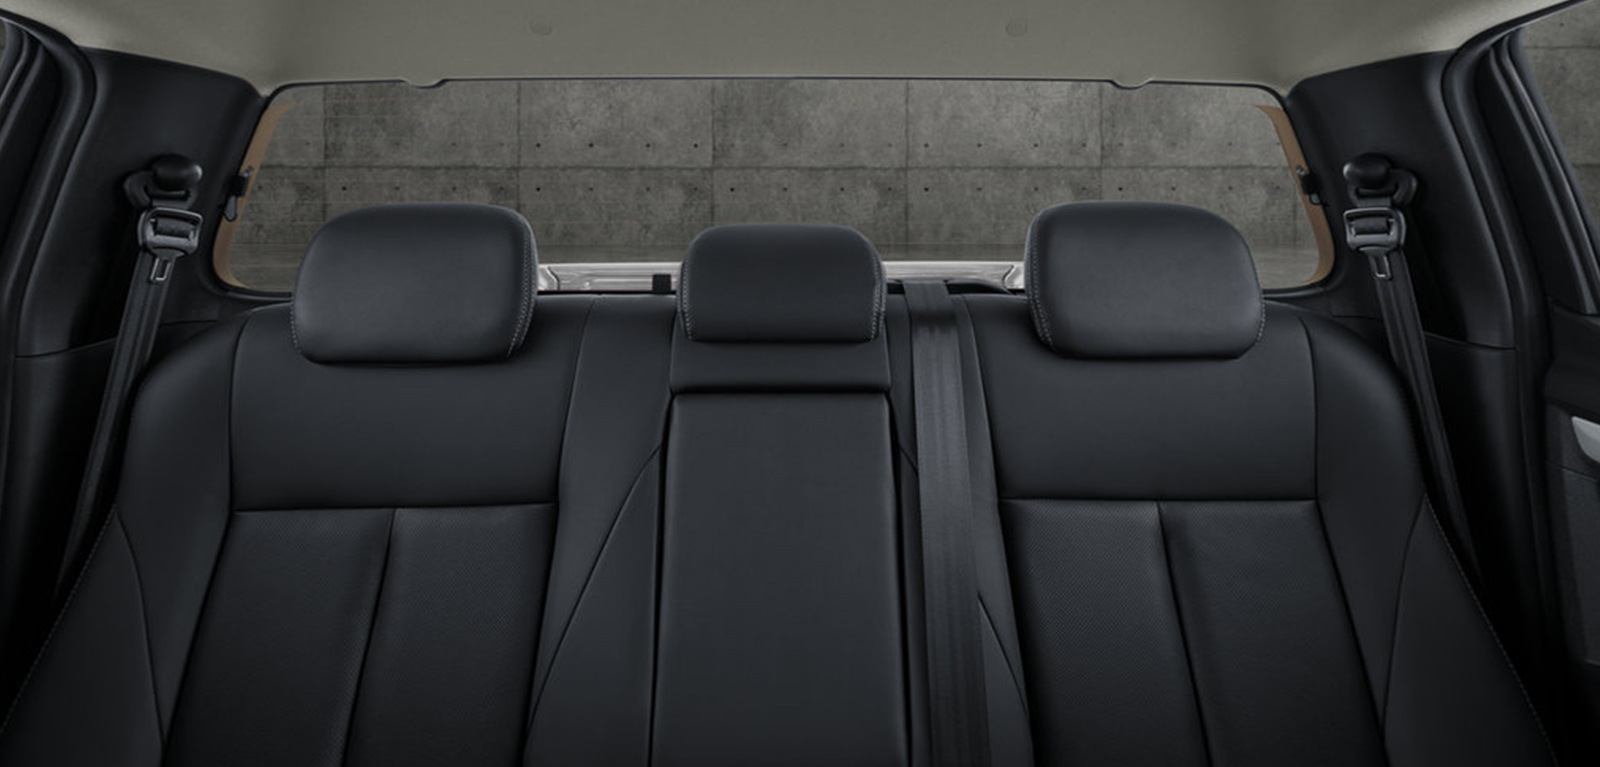 Isuzu D Max 2022 interior rear seats